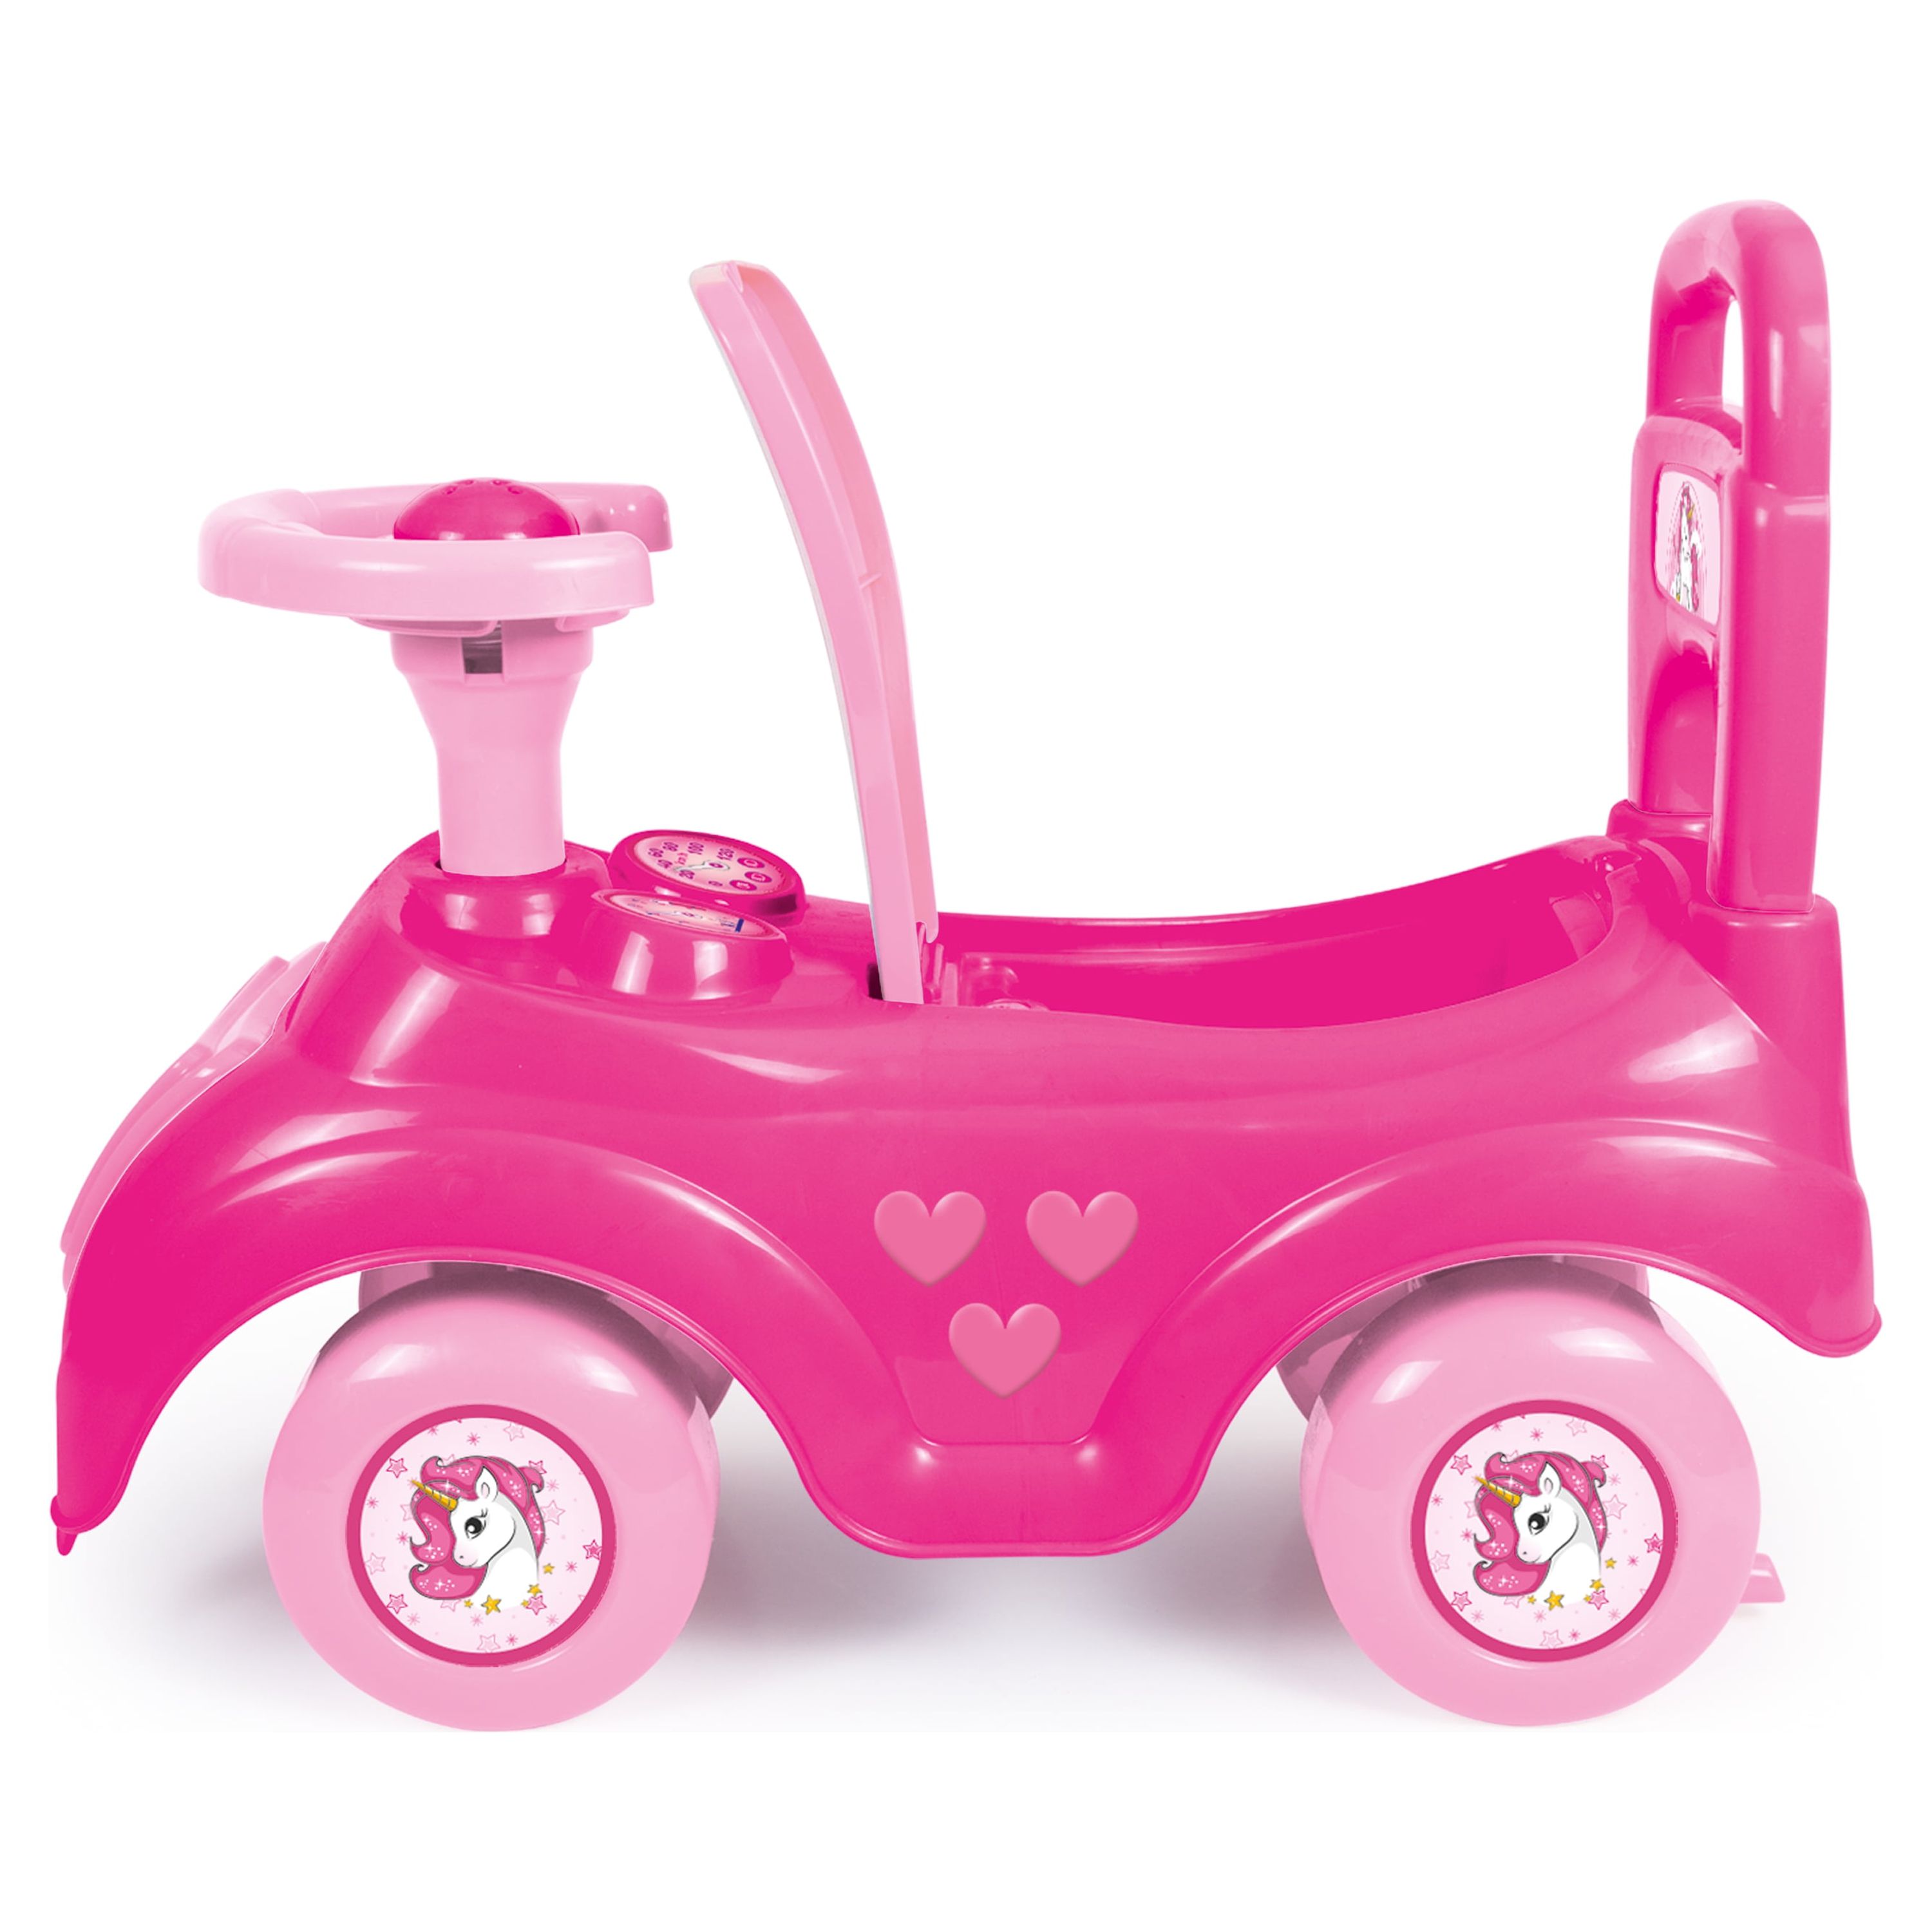 Dolu Toys - Push & Pedal Ride-on's Pink Unicorn Sit and Ride unisex - image 2 of 4